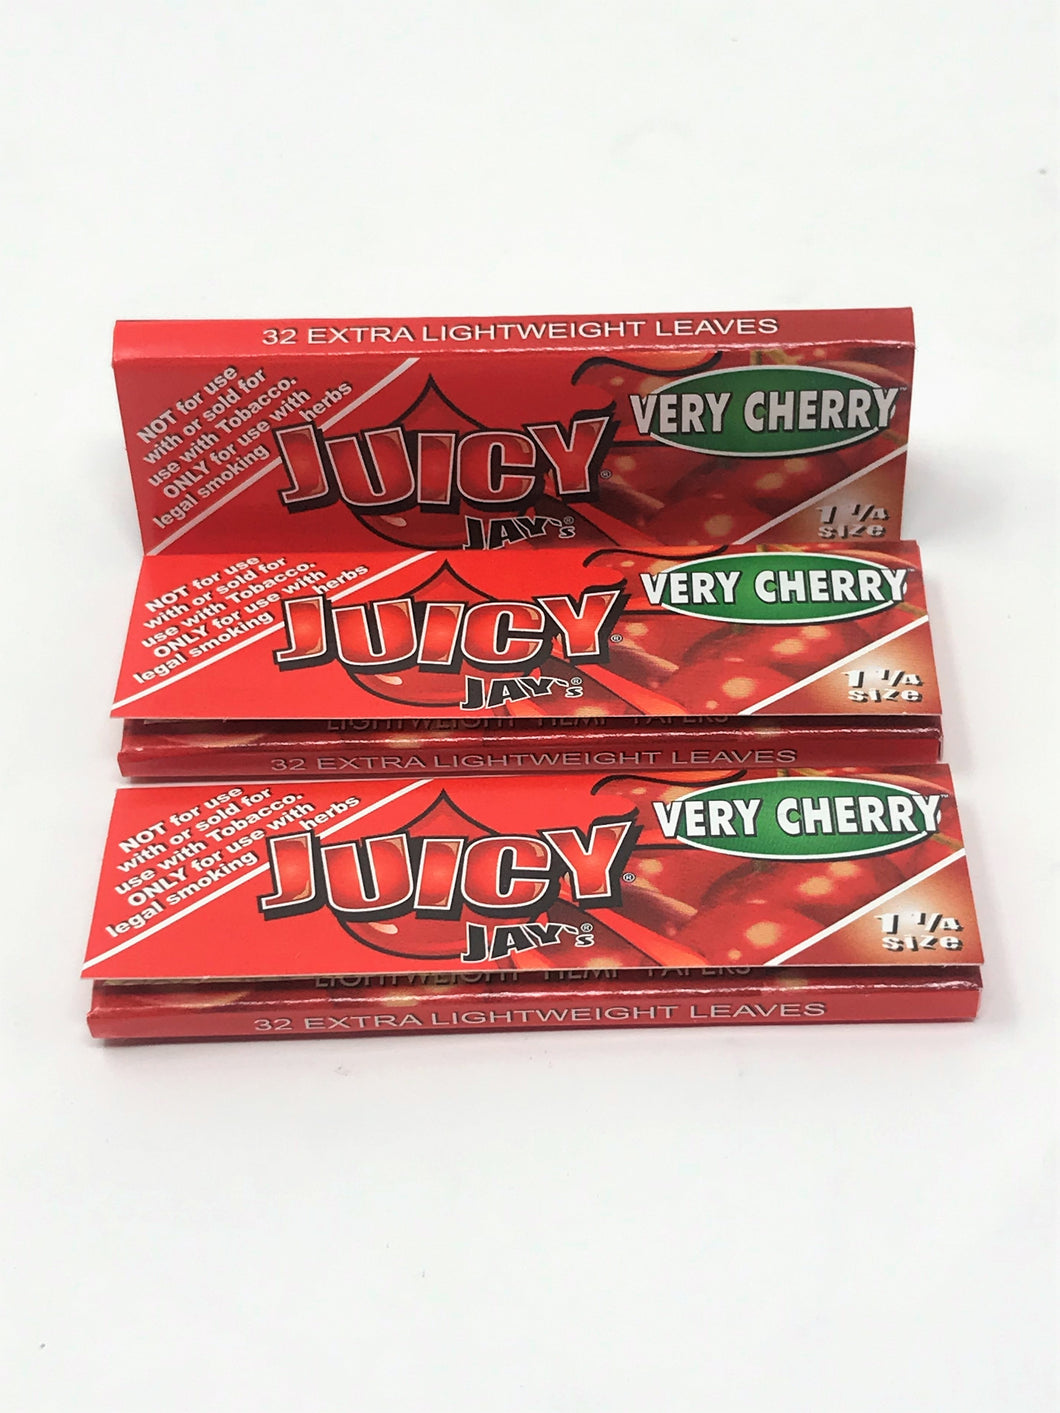 Very Cherry JUICY JAY'S - 1 1/4